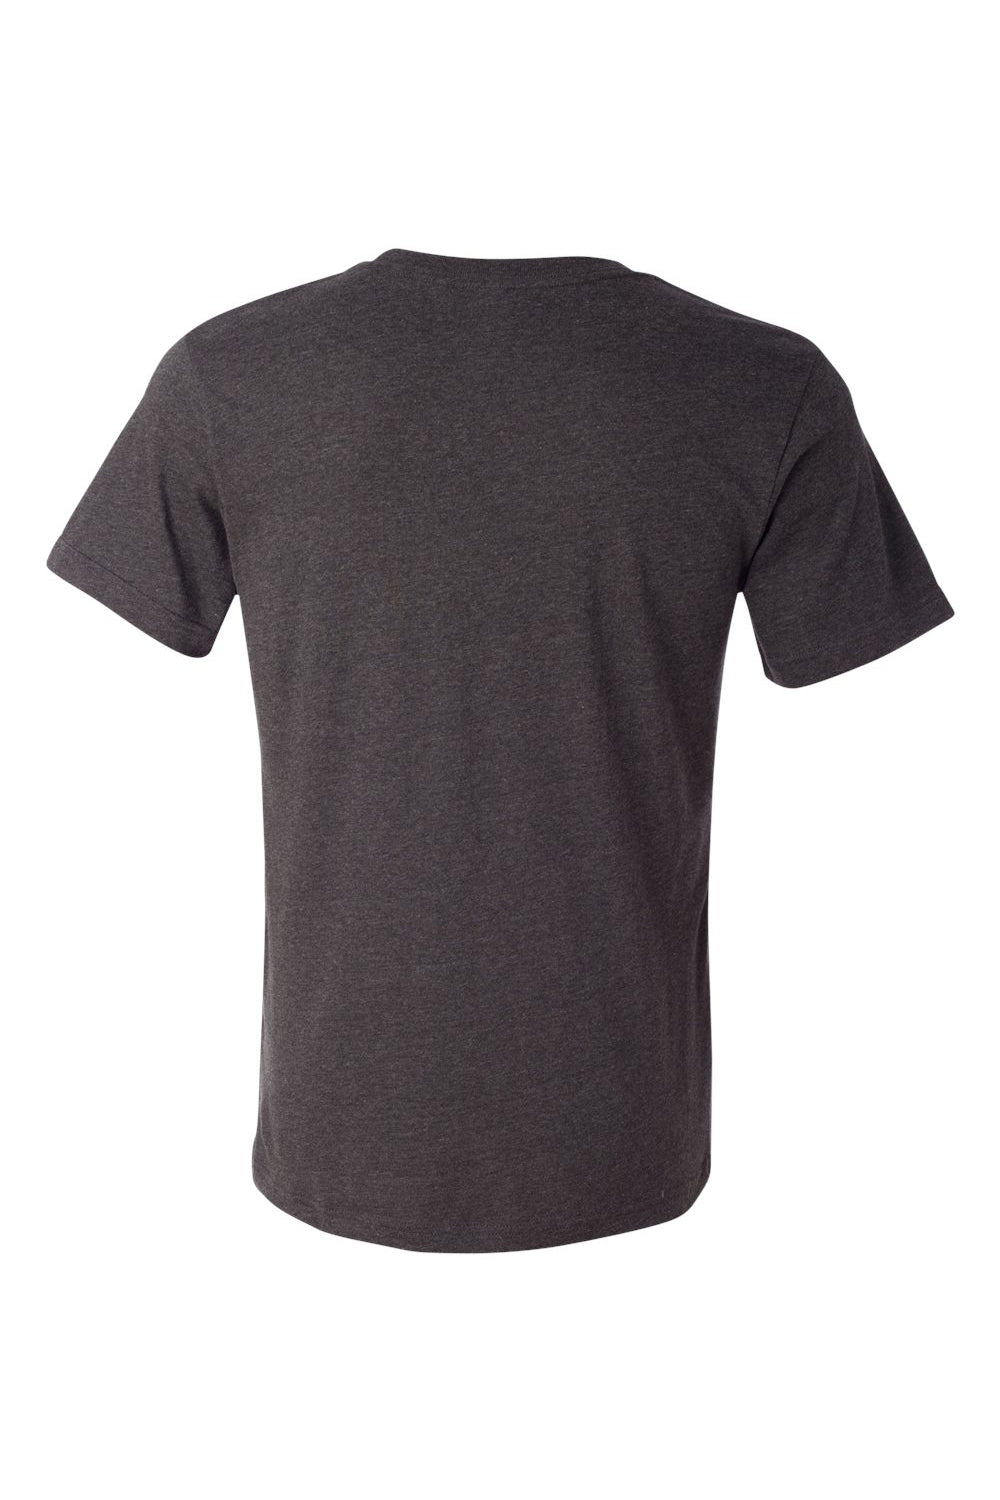 Bella + Canvas 3021 Mens Jersey Short Sleeve Crewneck T-Shirt w/ Pocket Heather Dark Grey Flat Back